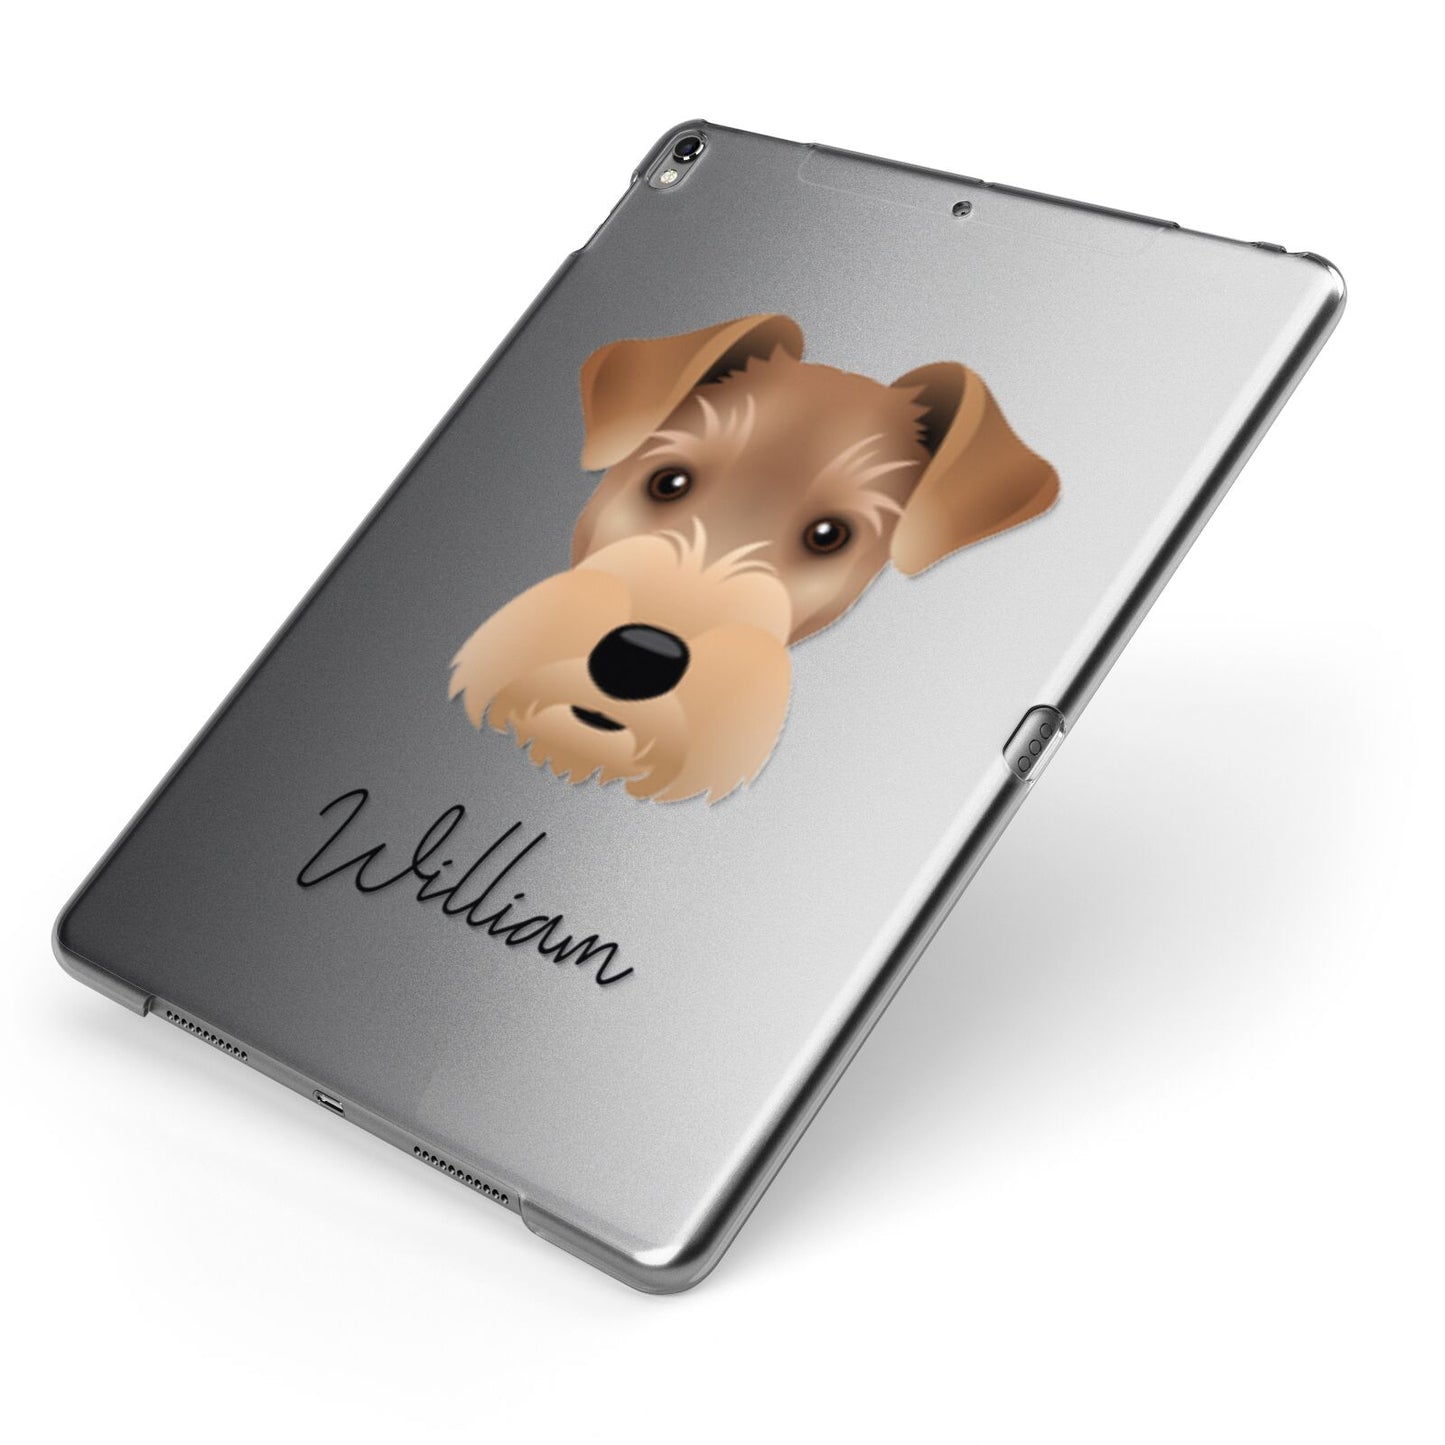 Welsh Terrier Personalised Apple iPad Case on Grey iPad Side View